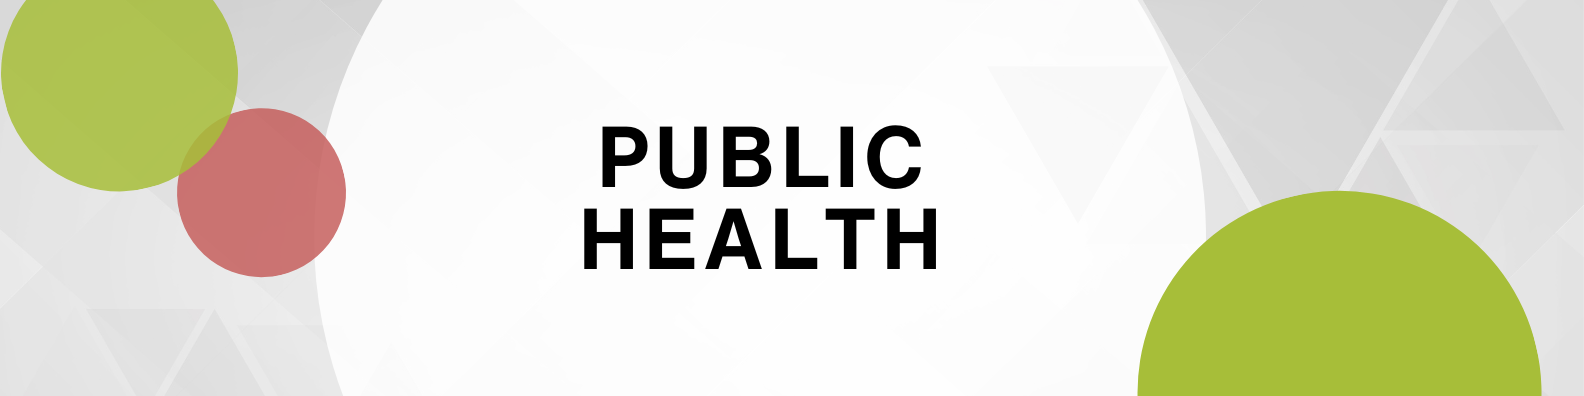 Public_Health.png